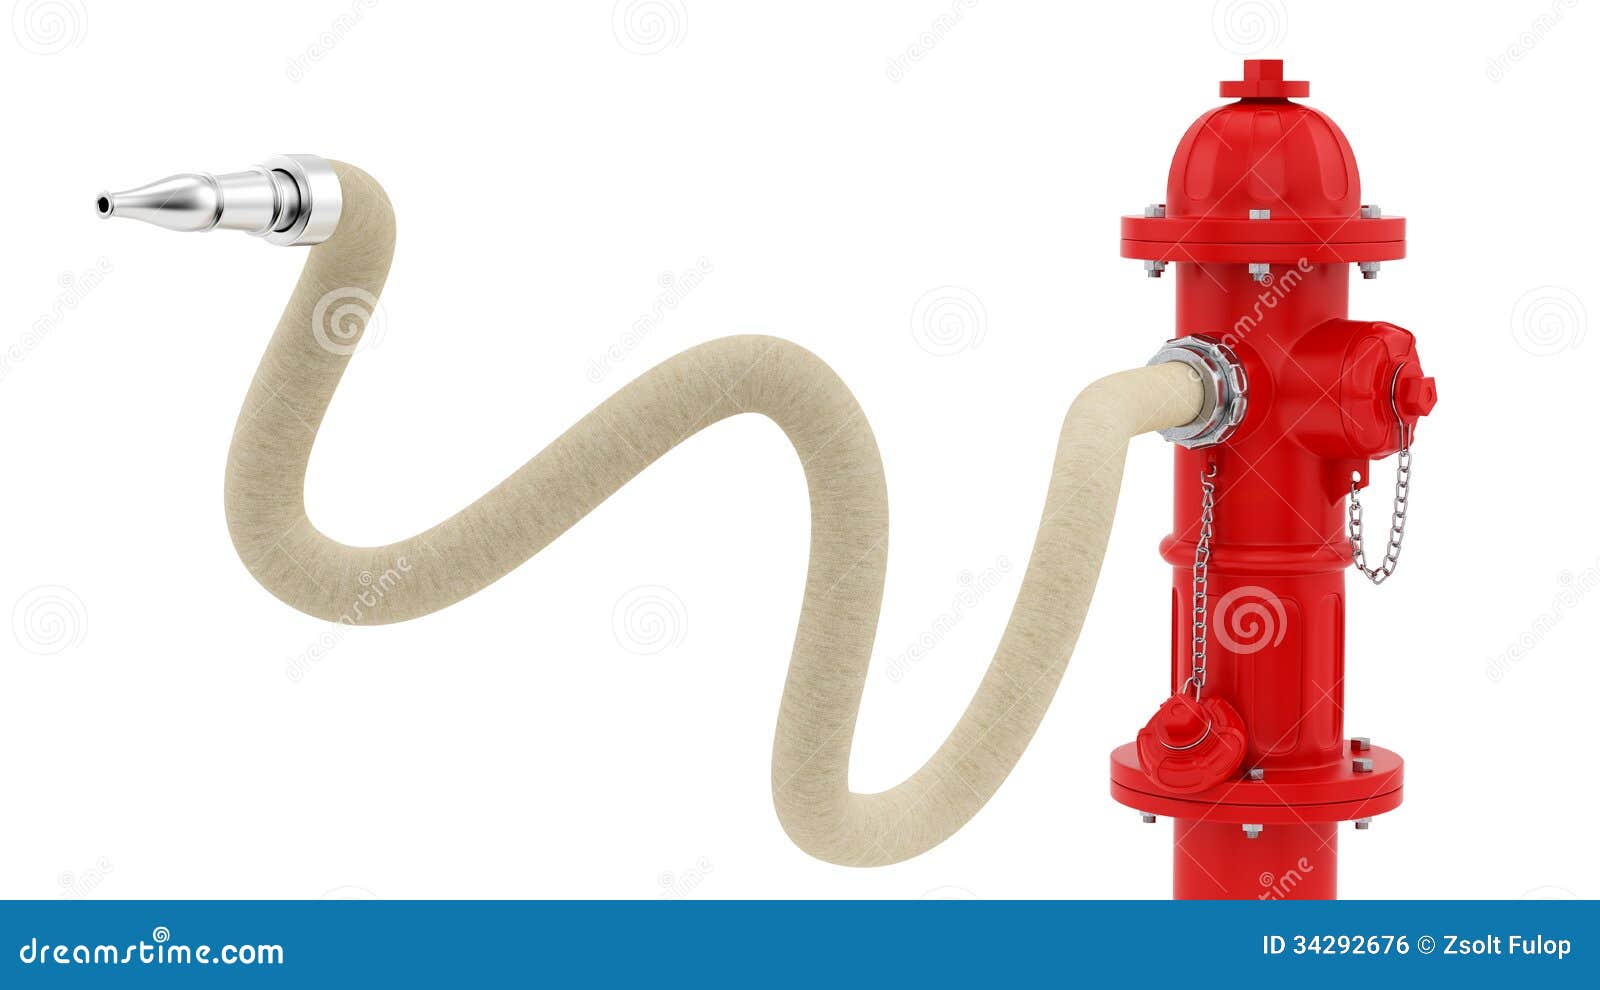 Red fire hydrant stock illustration. Illustration of steel - 34292676